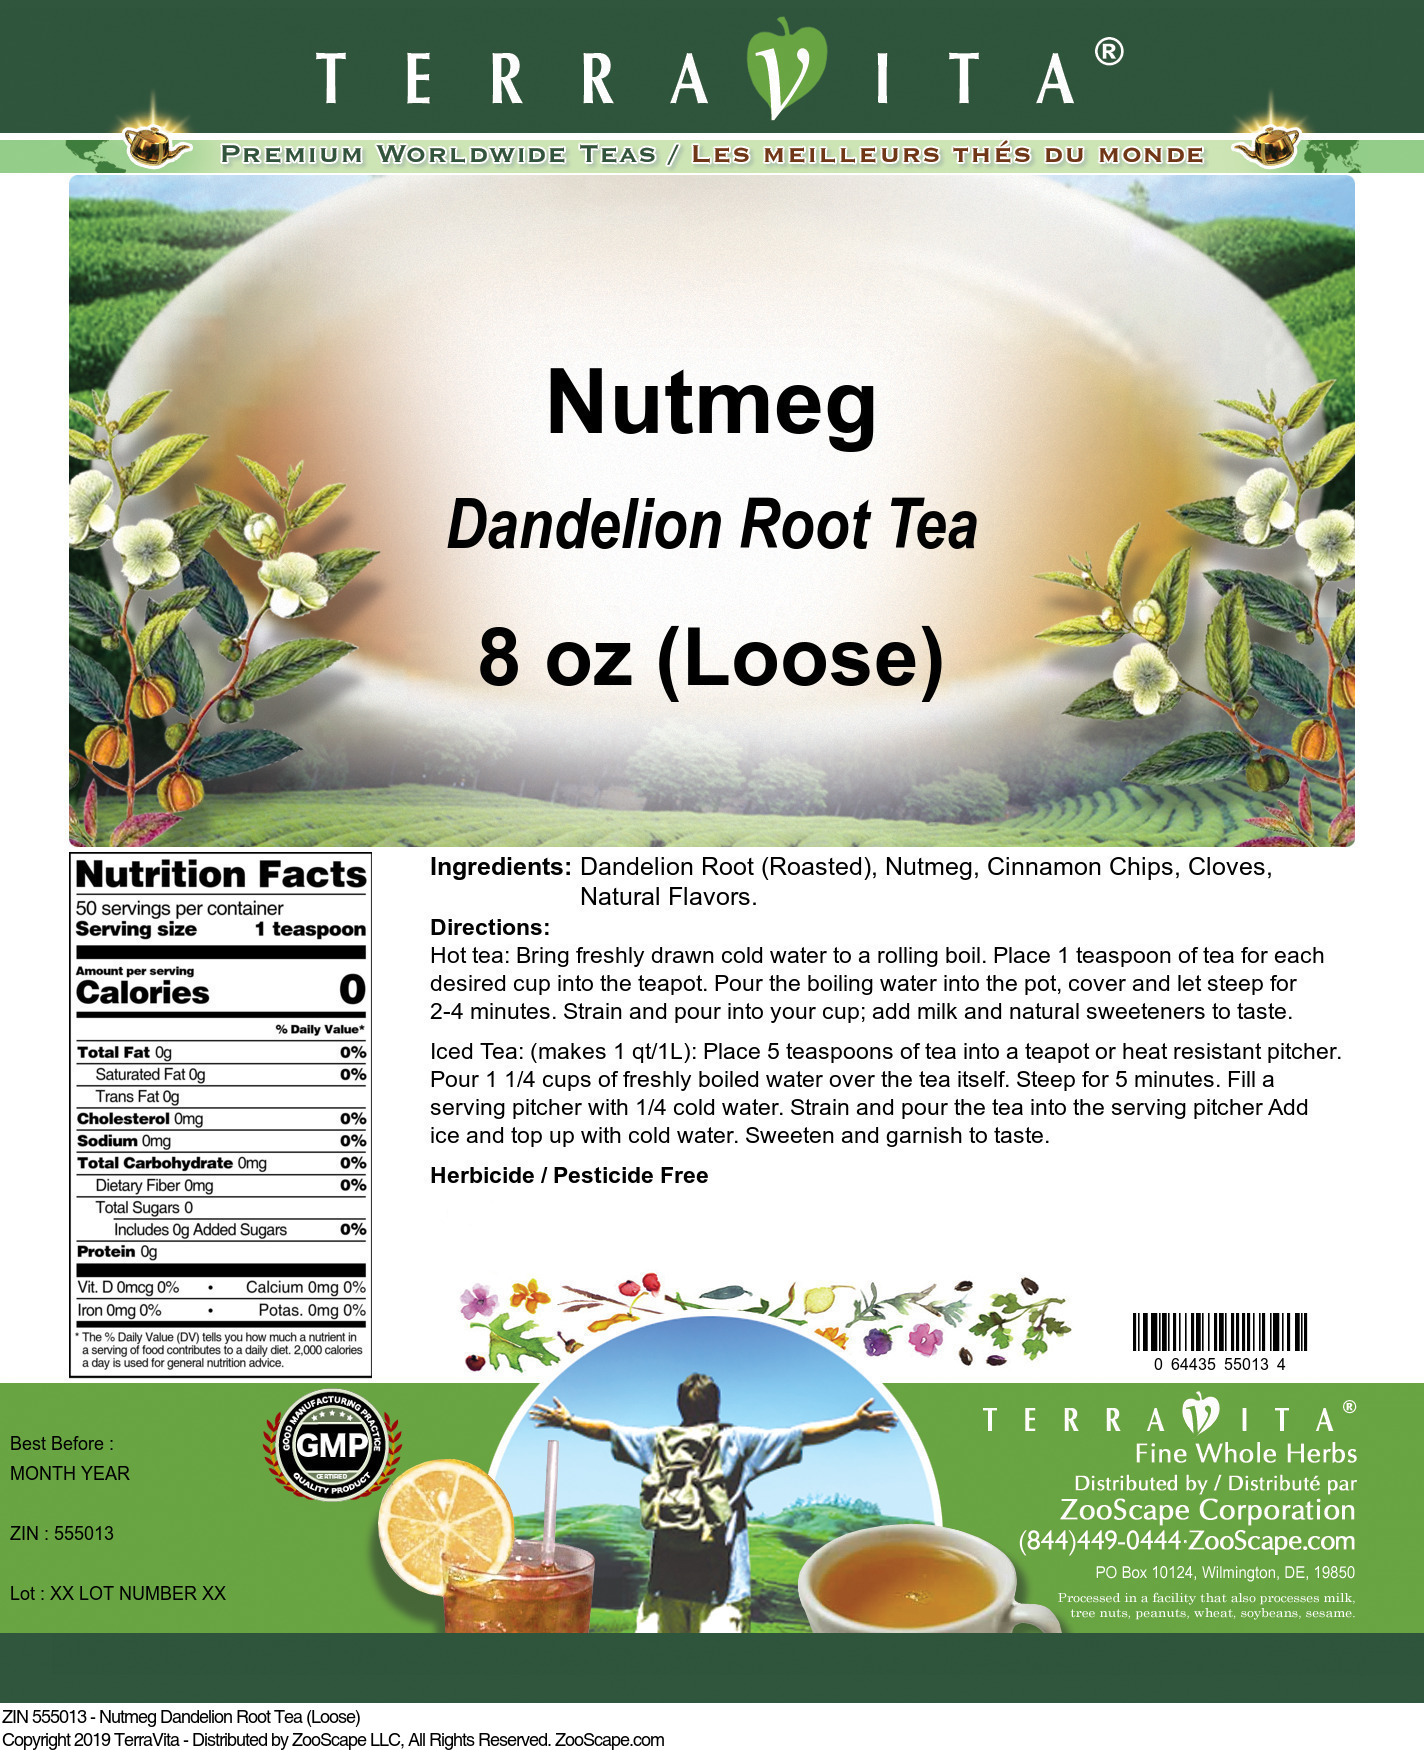 Nutmeg Dandelion Root Tea (Loose) - Label